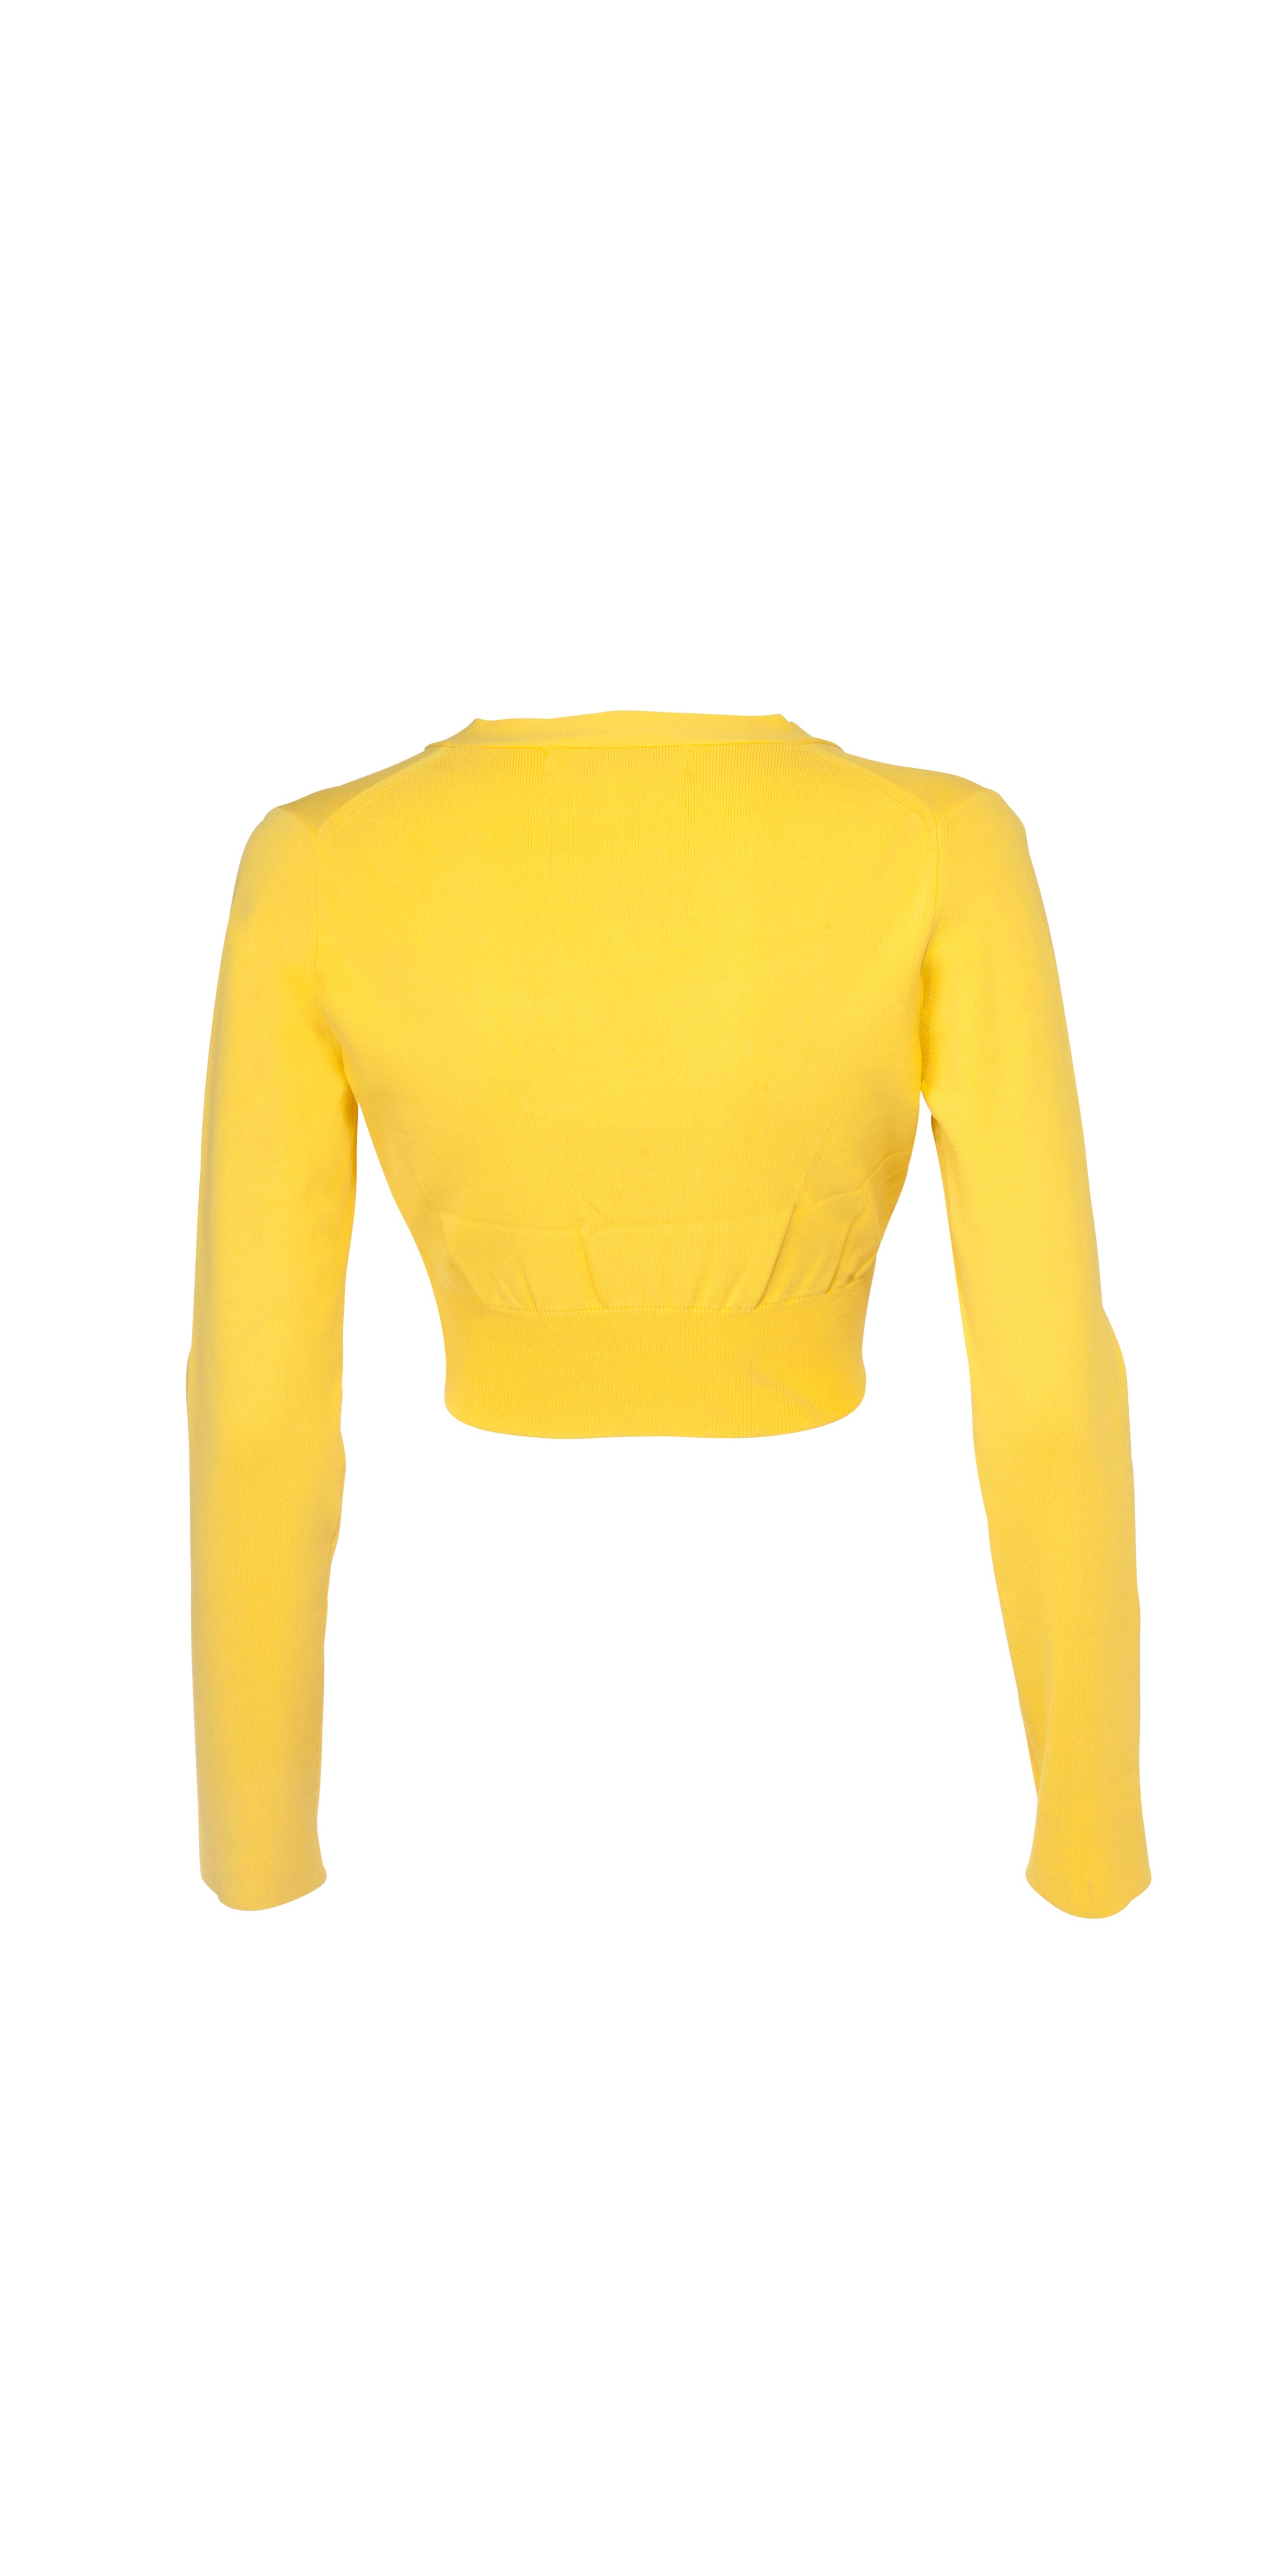 Elsa Knit Top - Yellow